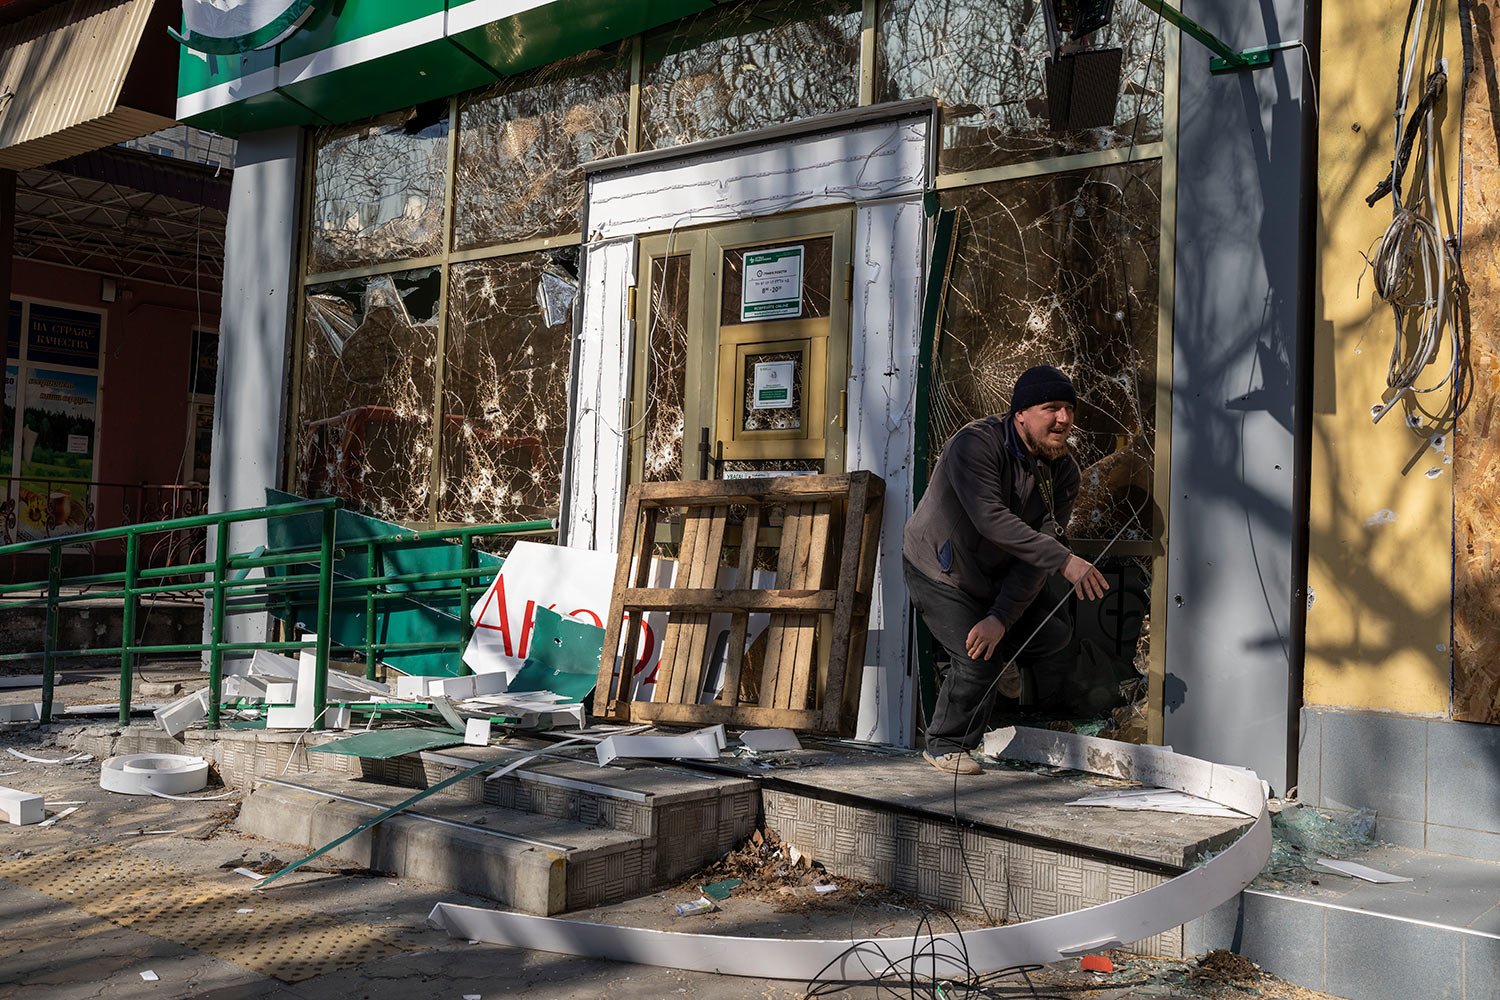  A man exits a damaged pharmacy following a bombing that killed several civilians, in Mykolaiv Ukraine, Tuesday, April 5, 2022. (AP Photo/Petros Giannakouris) 